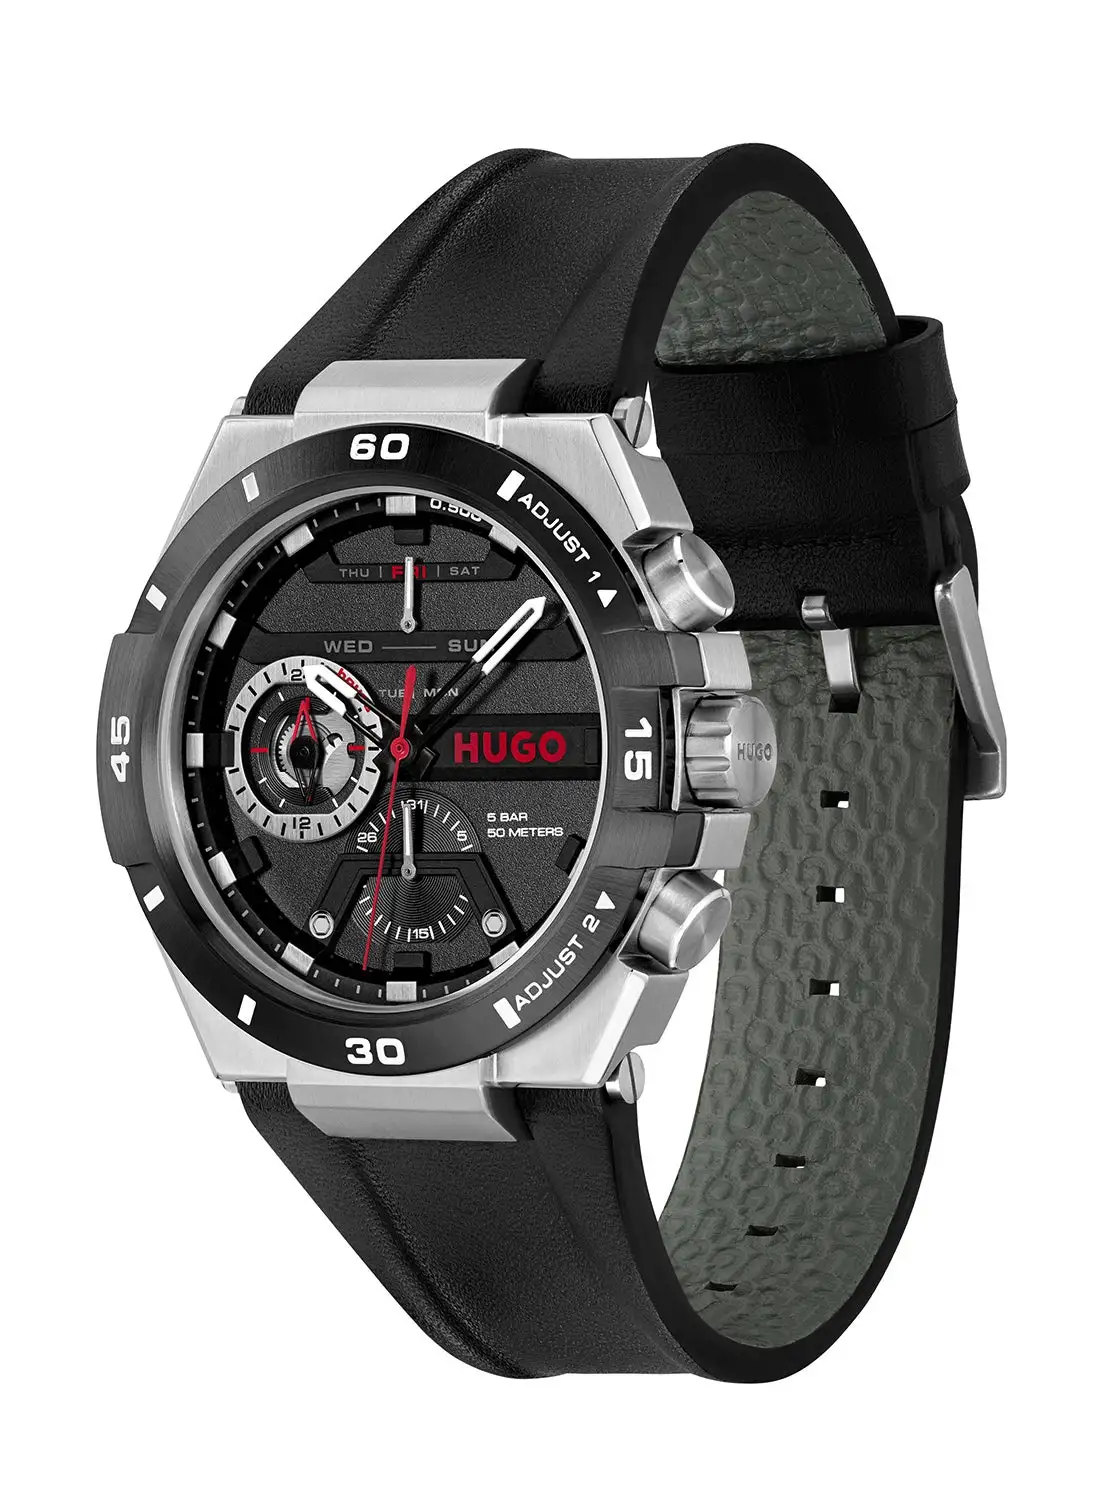 HUGO BOSS Men's Analog Round Shape Leather Wrist Watch 1530336 - 46 Mm